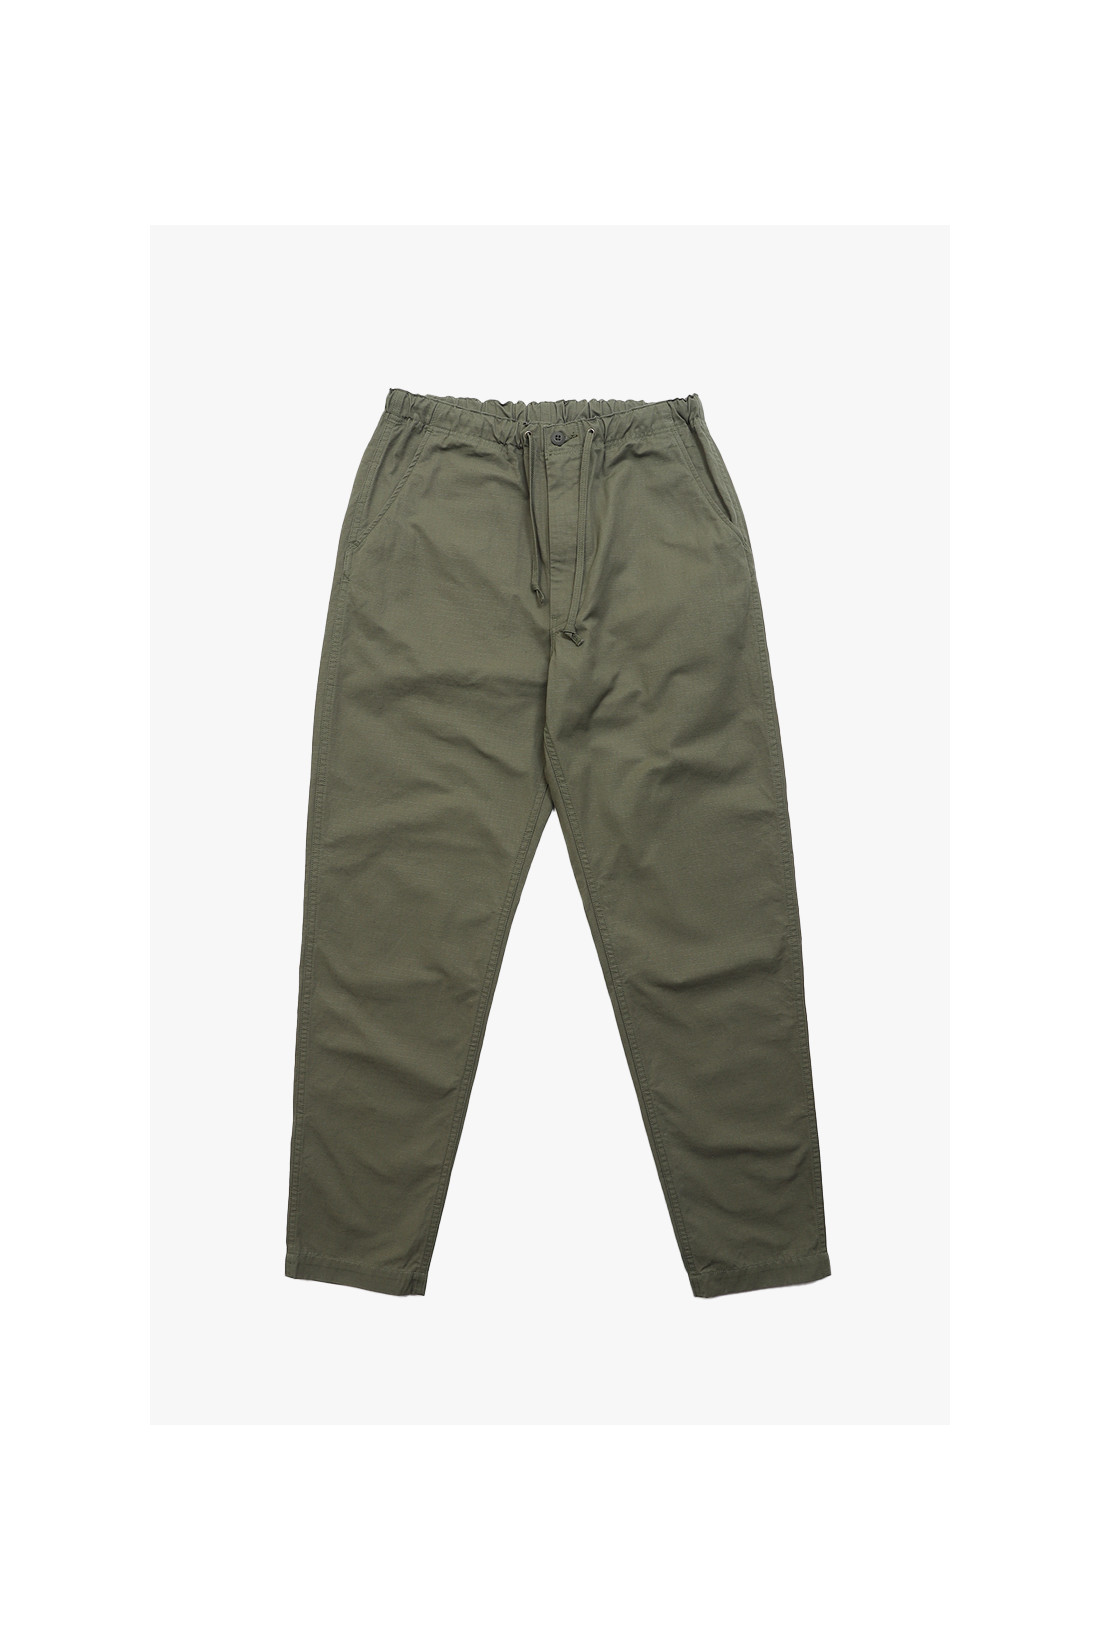 Orslow New yorker pants ripstop Army green - GRADUATE STORE | EN